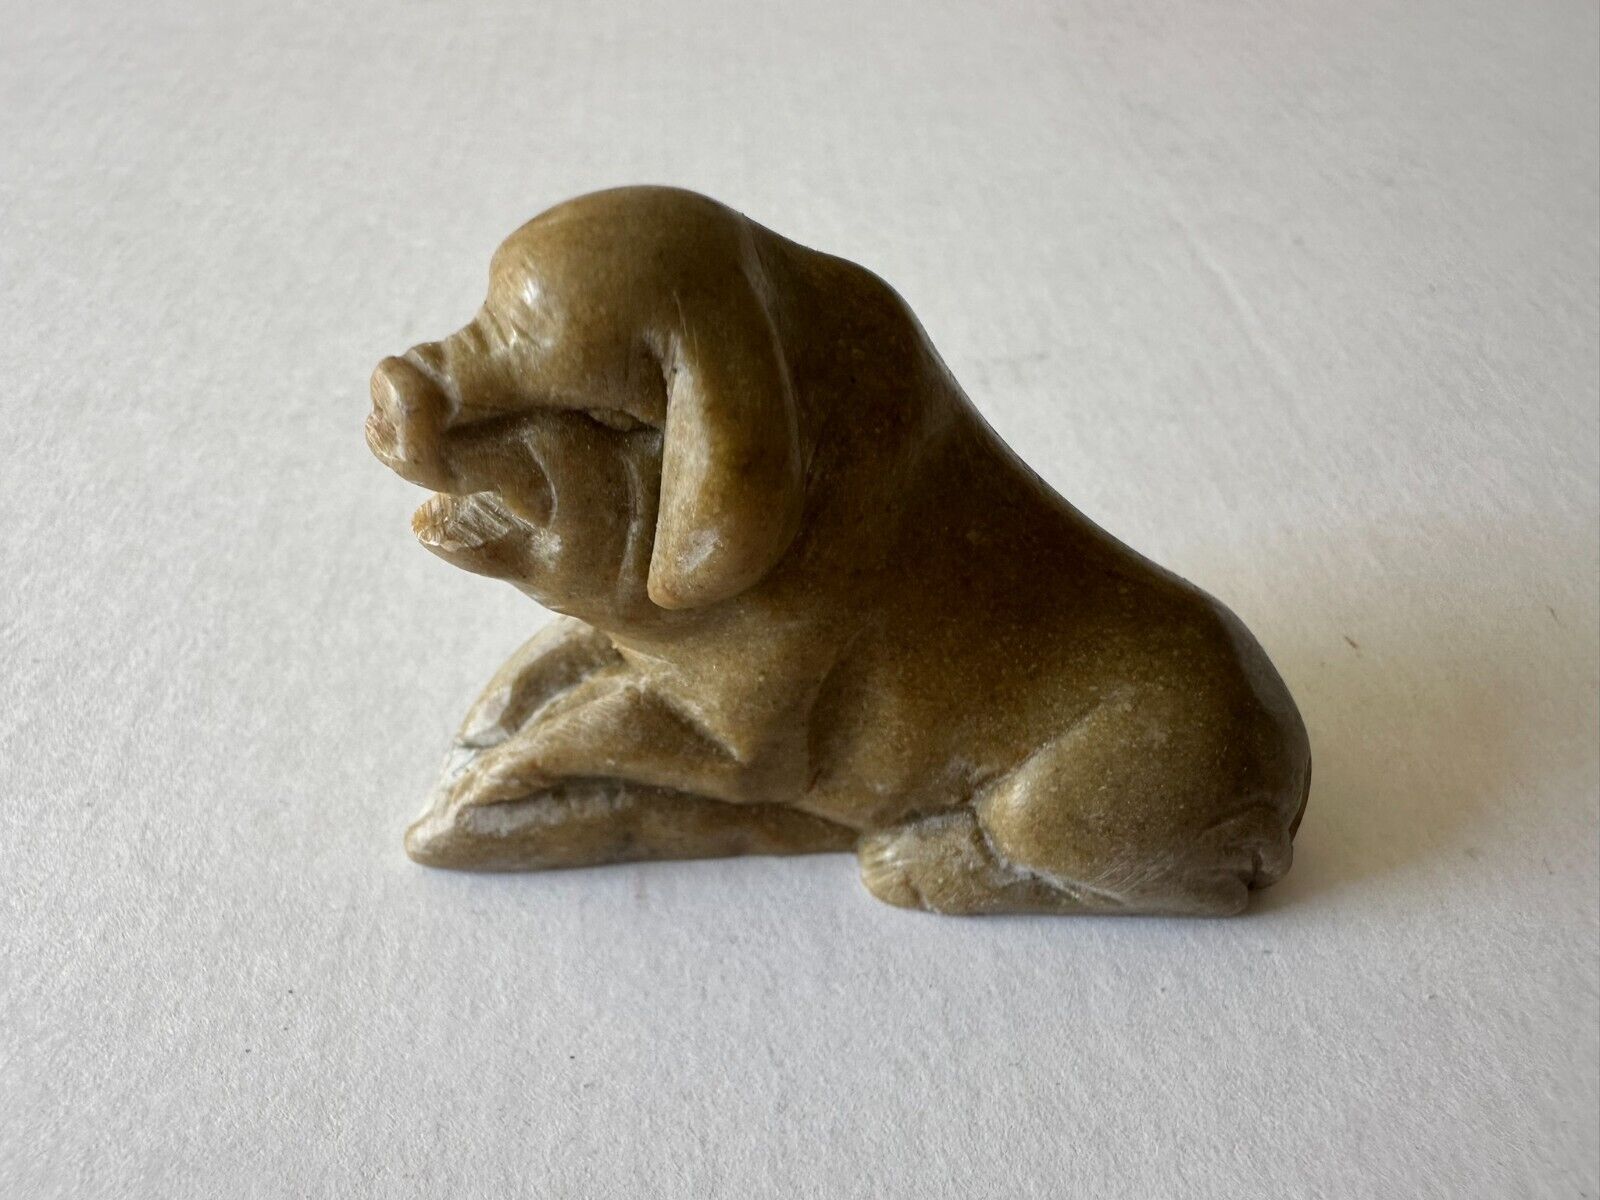 Antique miniature pig statuette sculpture brown moss colored